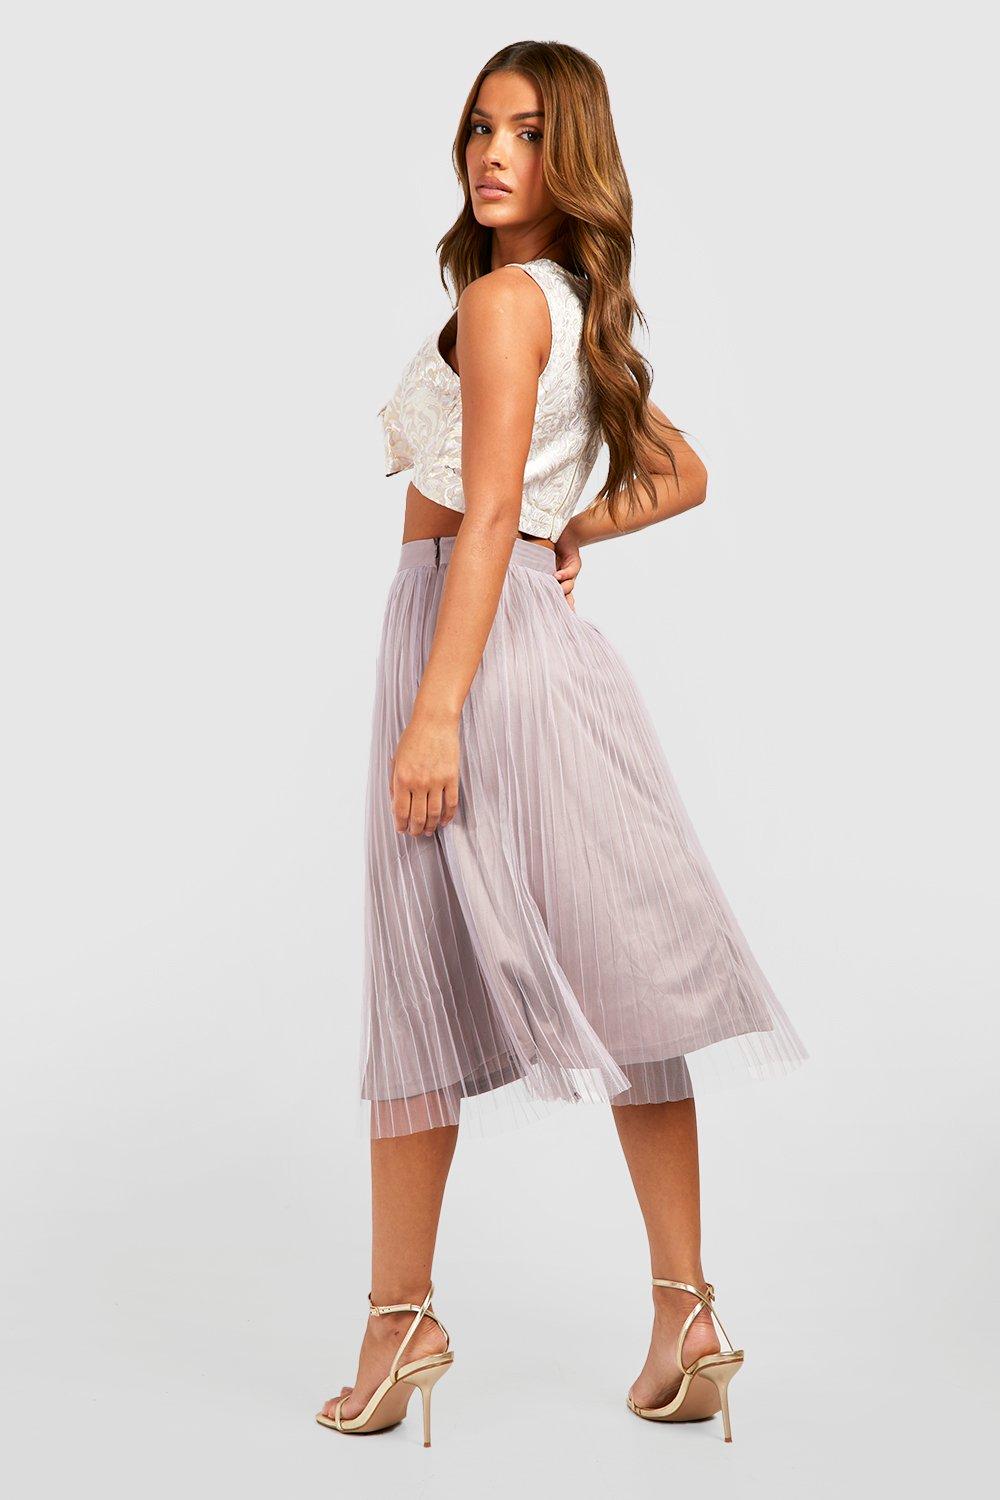 Boutique May Jacquard Top Midi Skirt Co-Ord Set | Boohoo